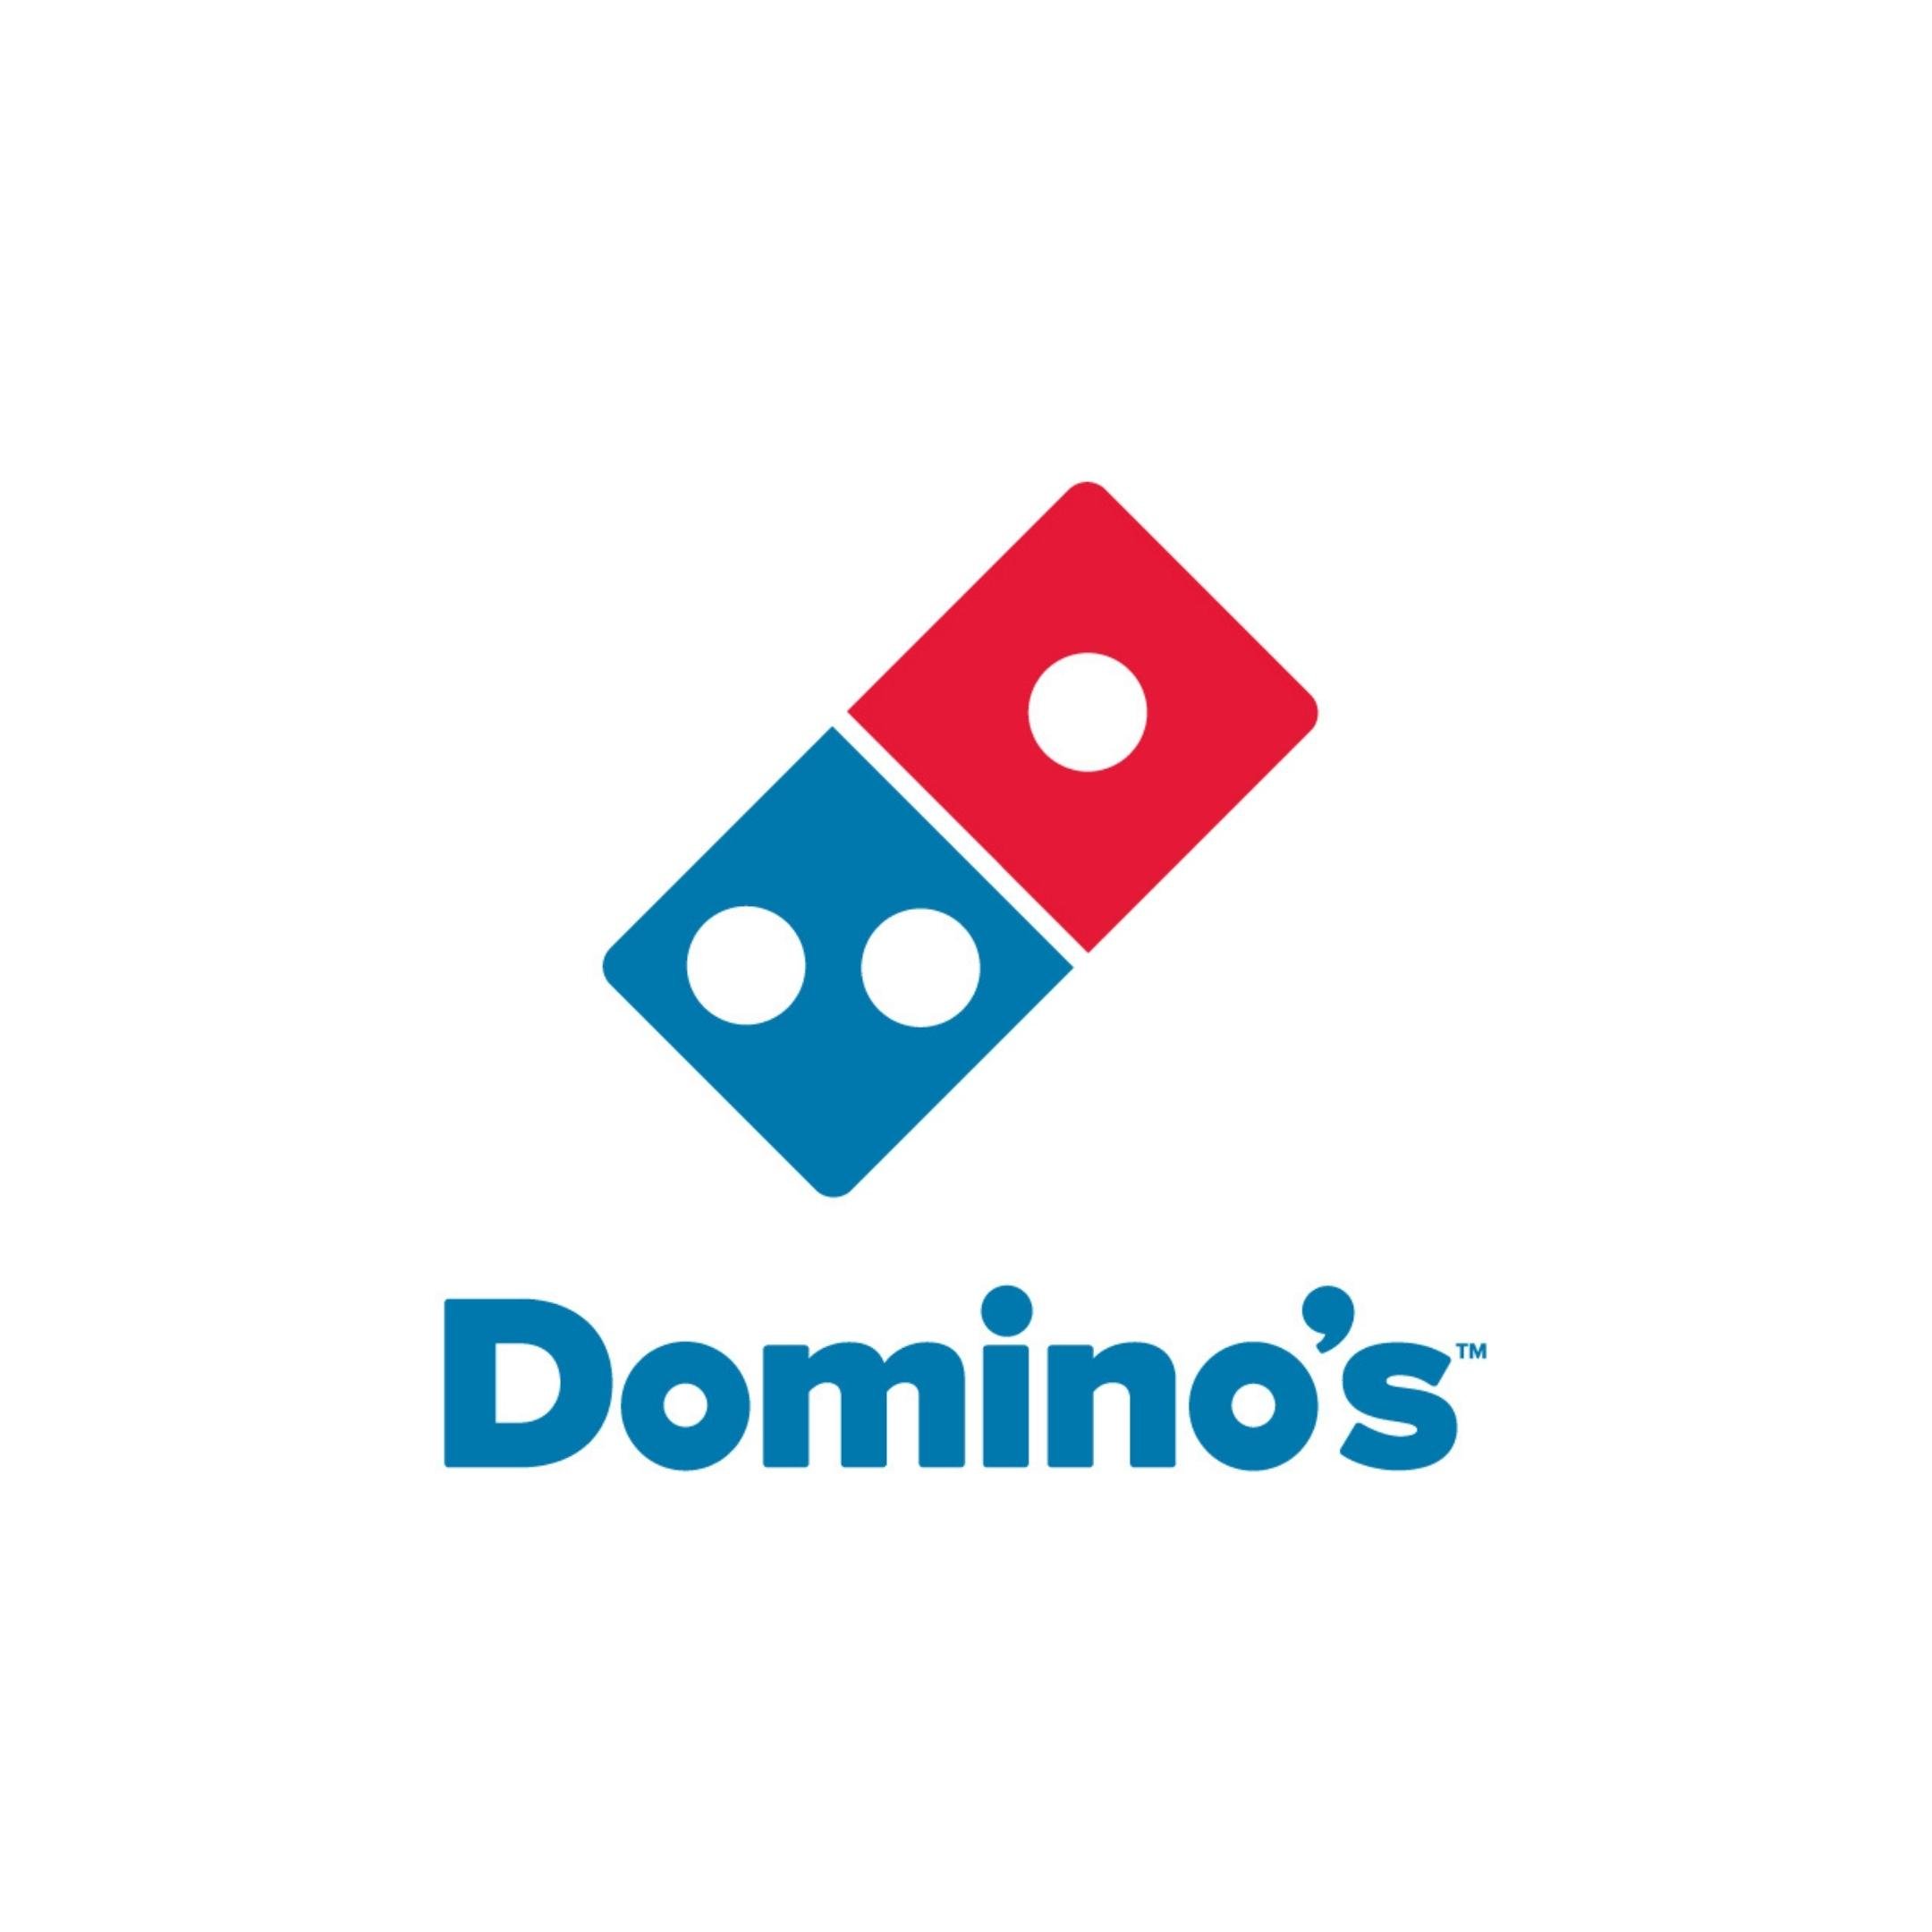 Sponsor Images - Dominos.jpg